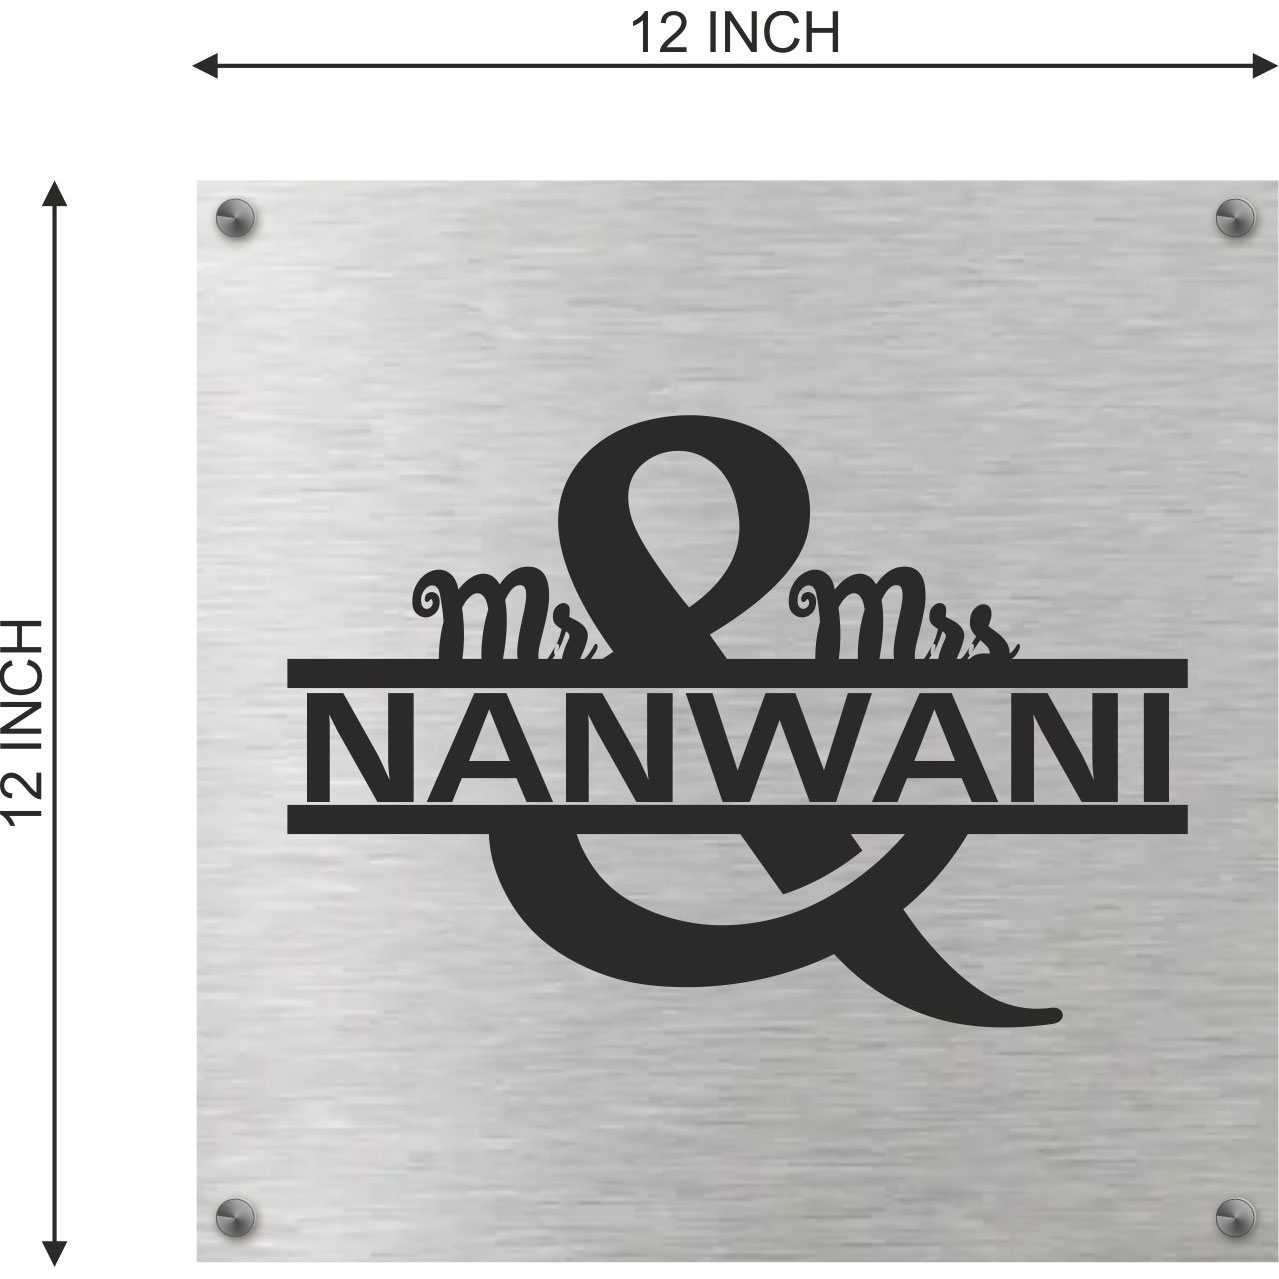 mr and mrs nanwani name plate